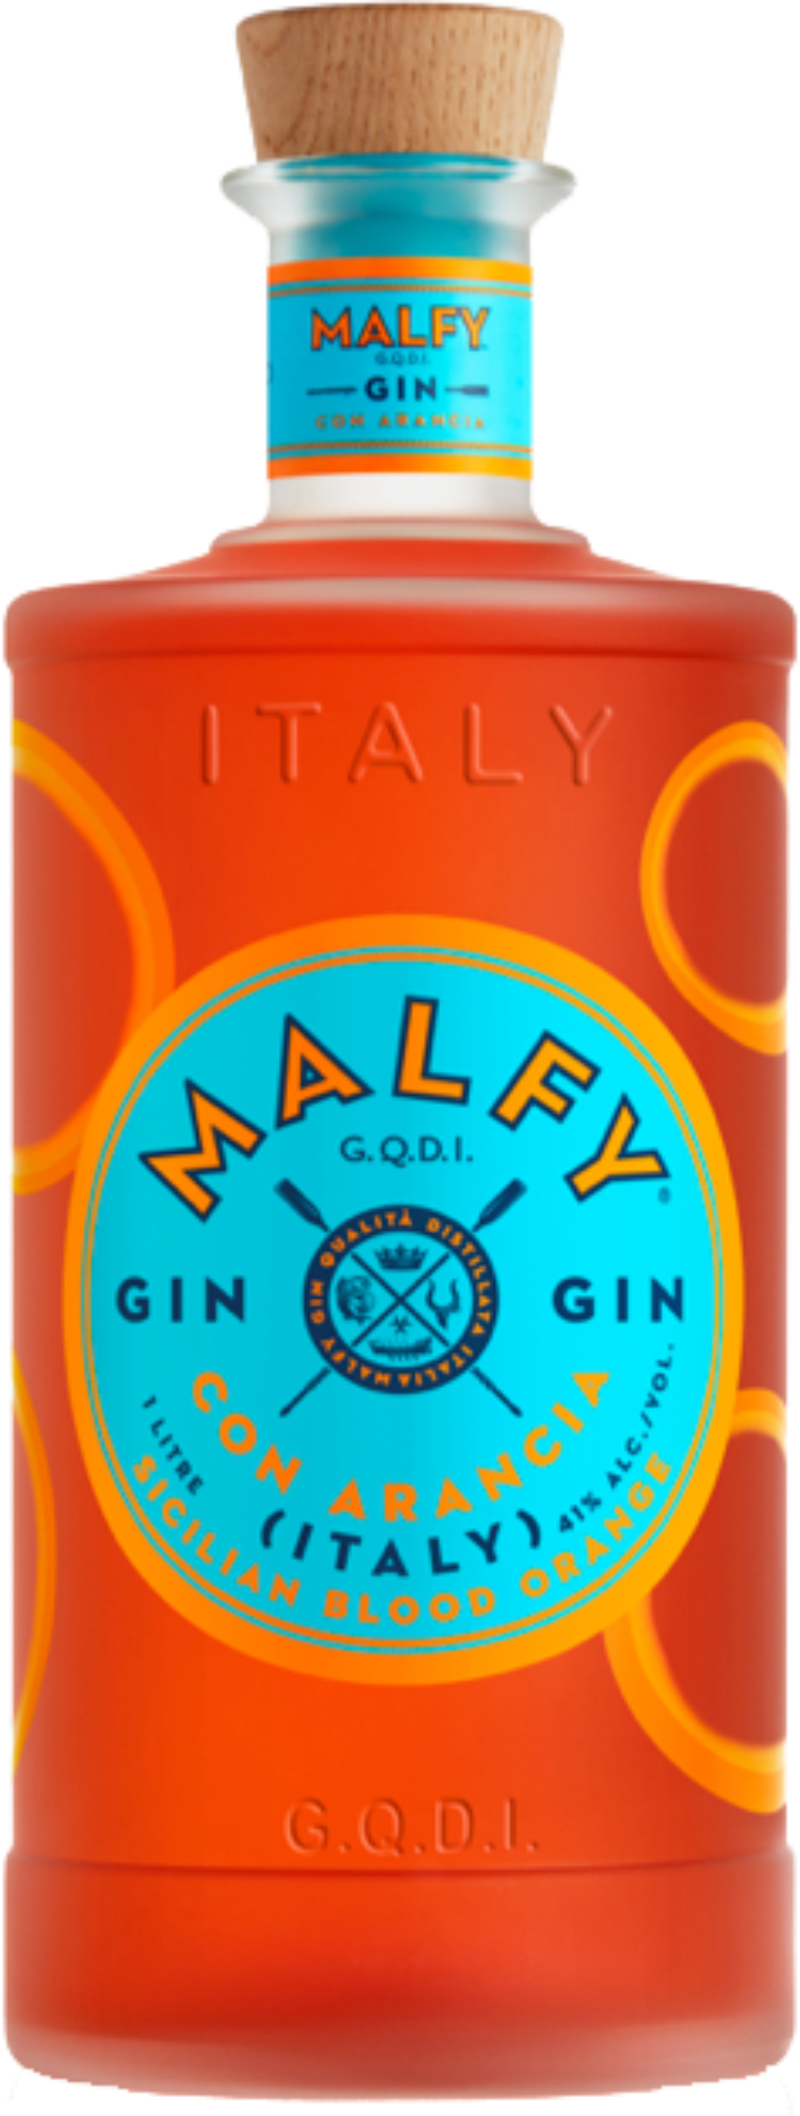 Malfy Arancia - Gin cl vol 100 Con 41%